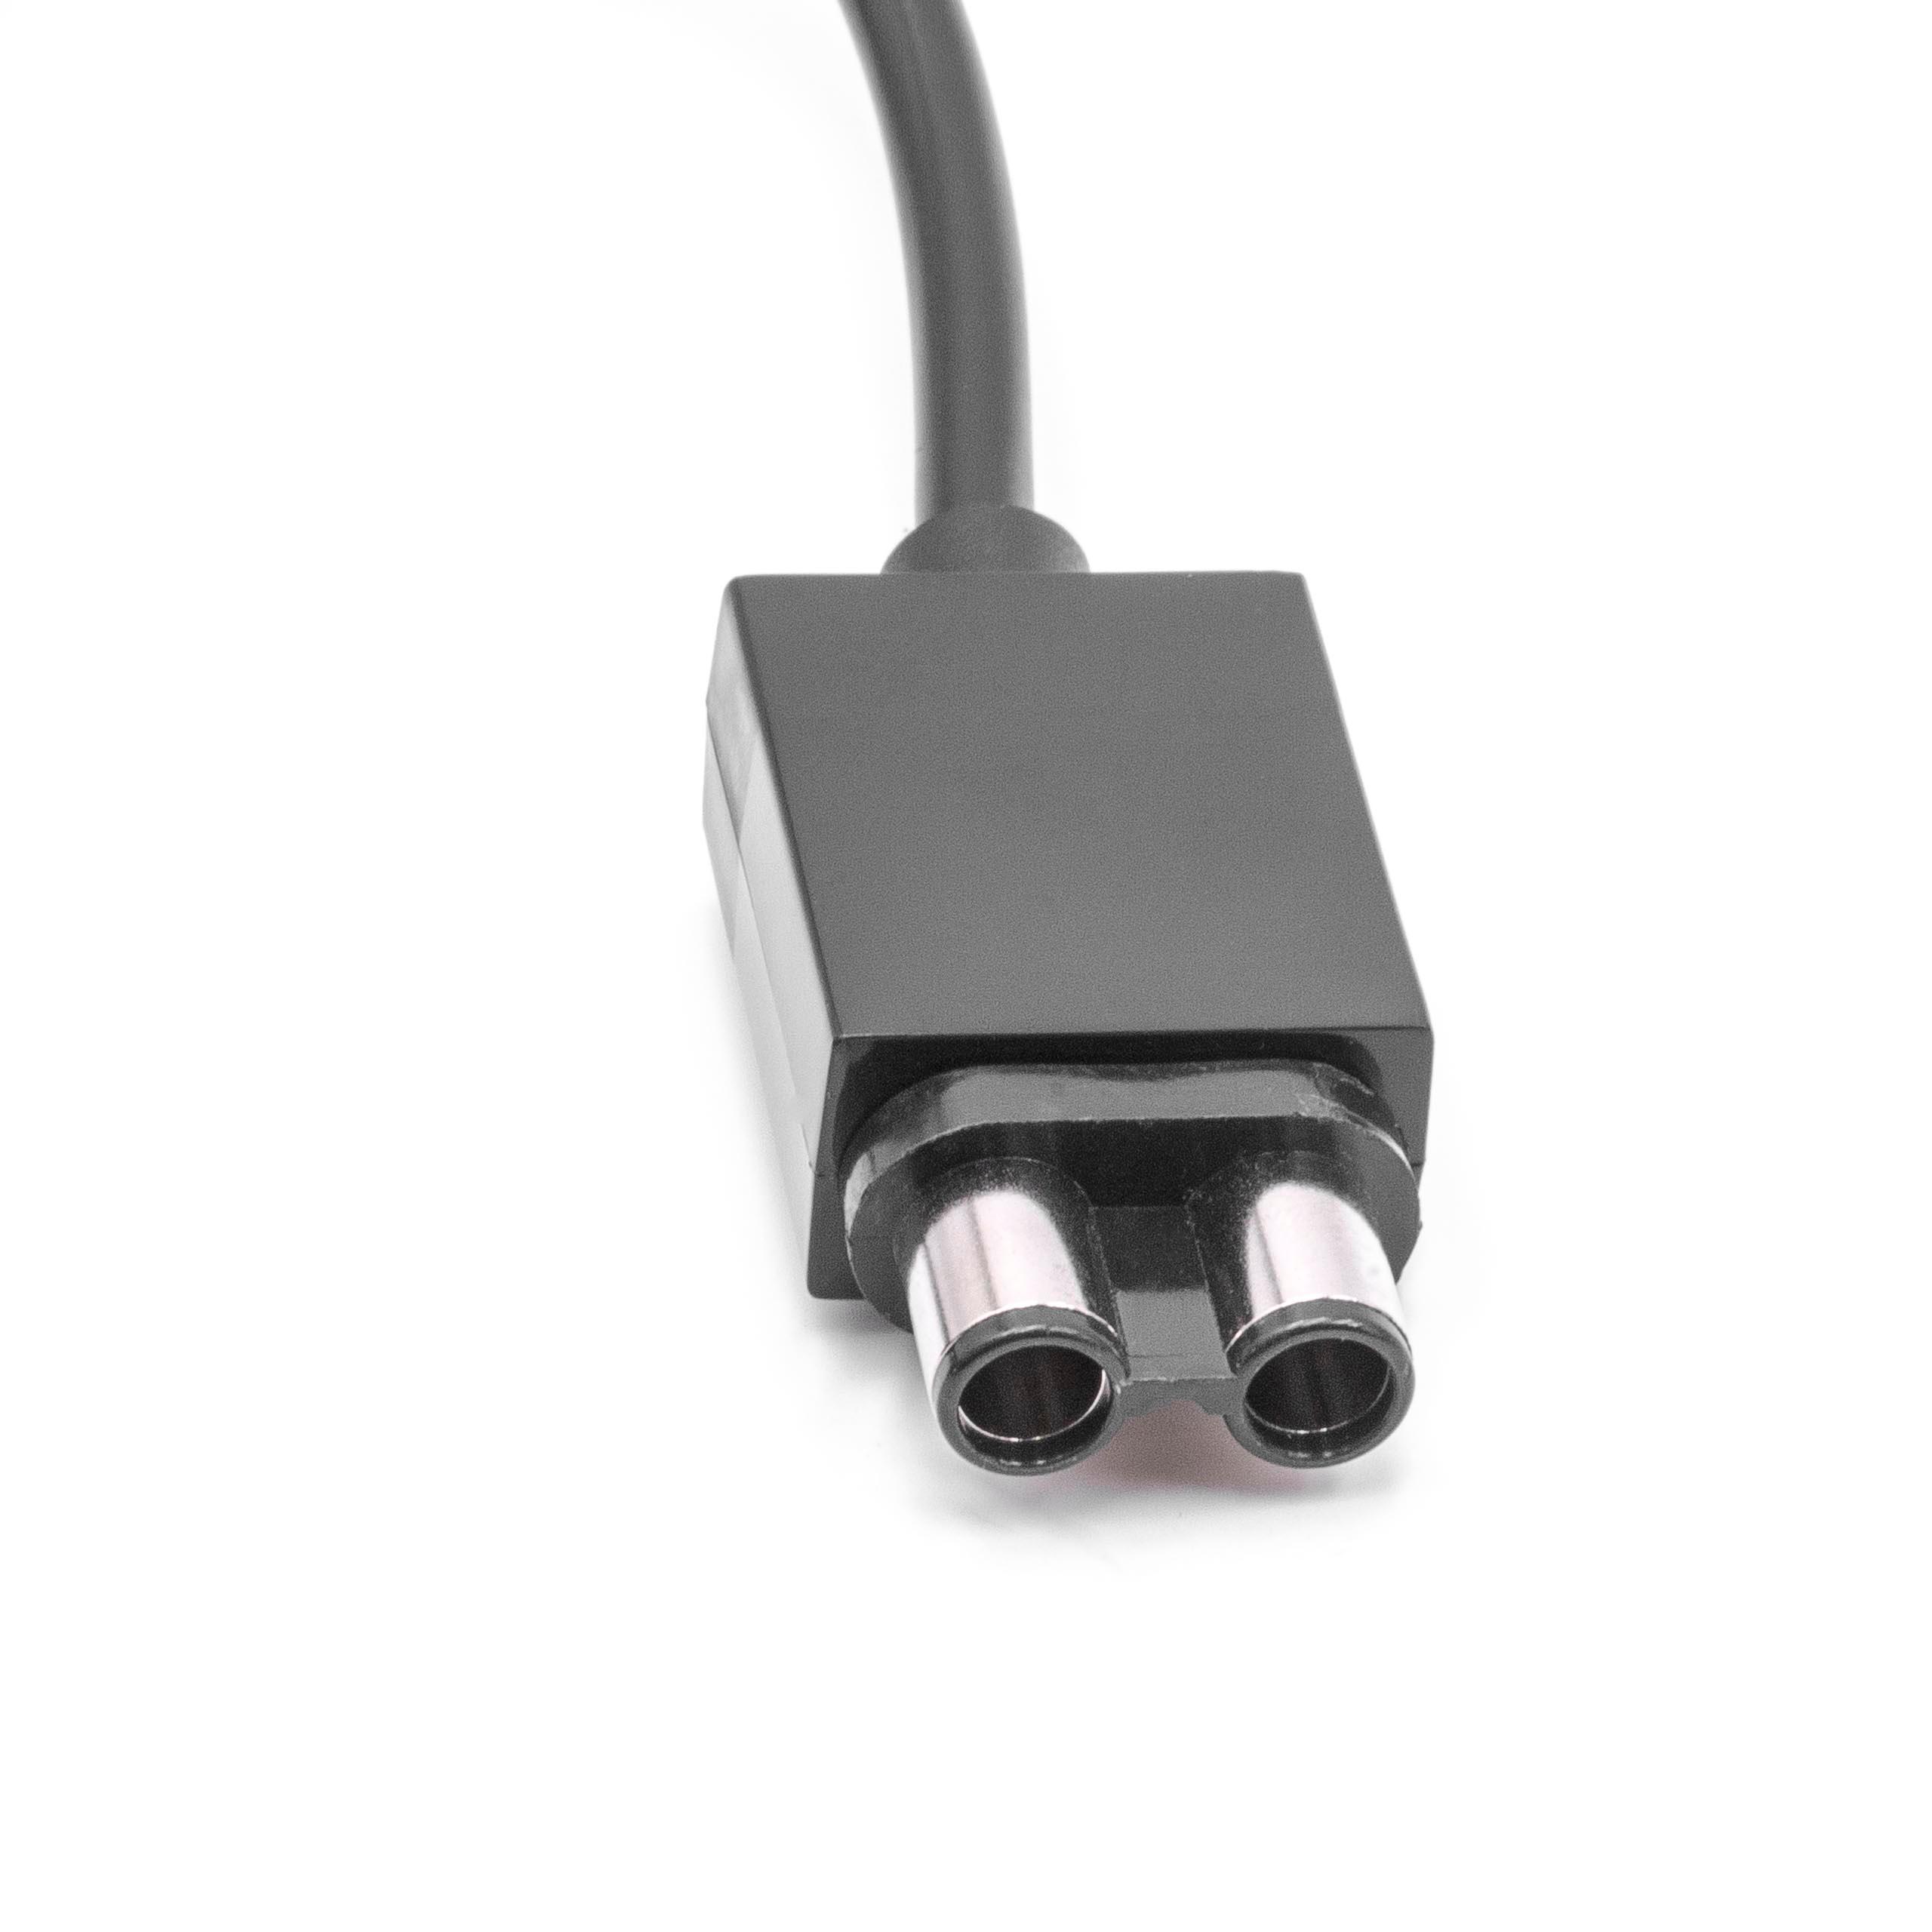 Cable adaptador para fuente alimentación para consola de juegos Microsoft Xbox One, 360 E, 360 Slim - 28 cm